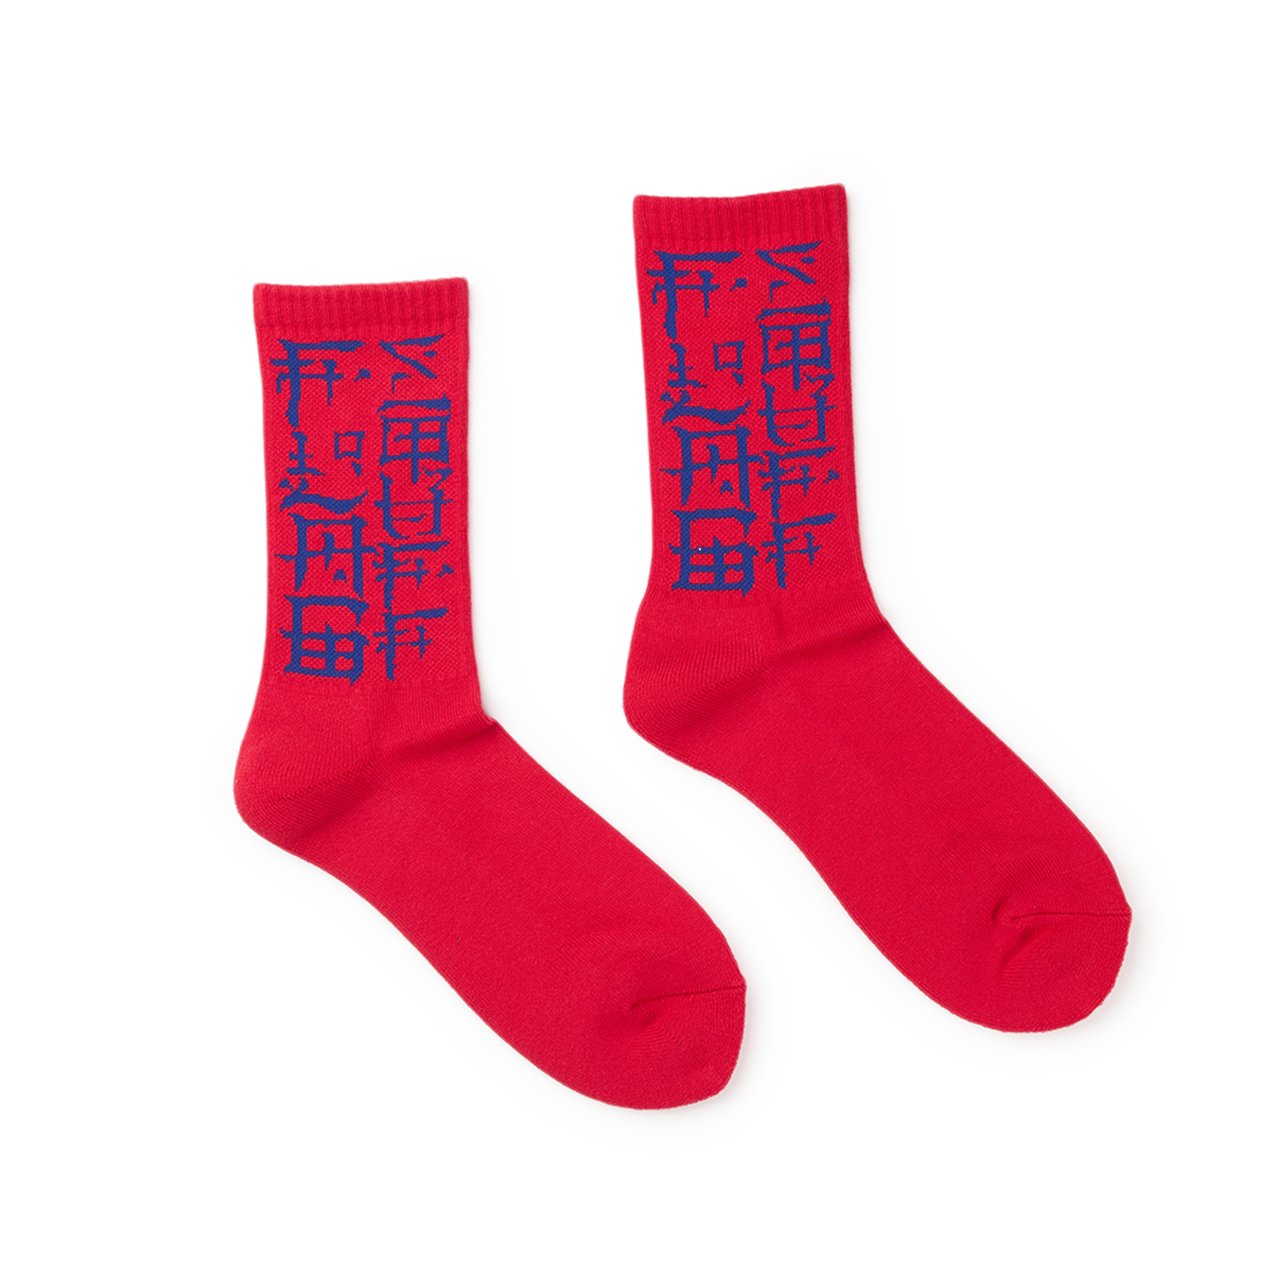 flagstuff "kanji logo" socks (red) - 19aw-fs-71 - a.plus - Image - 1